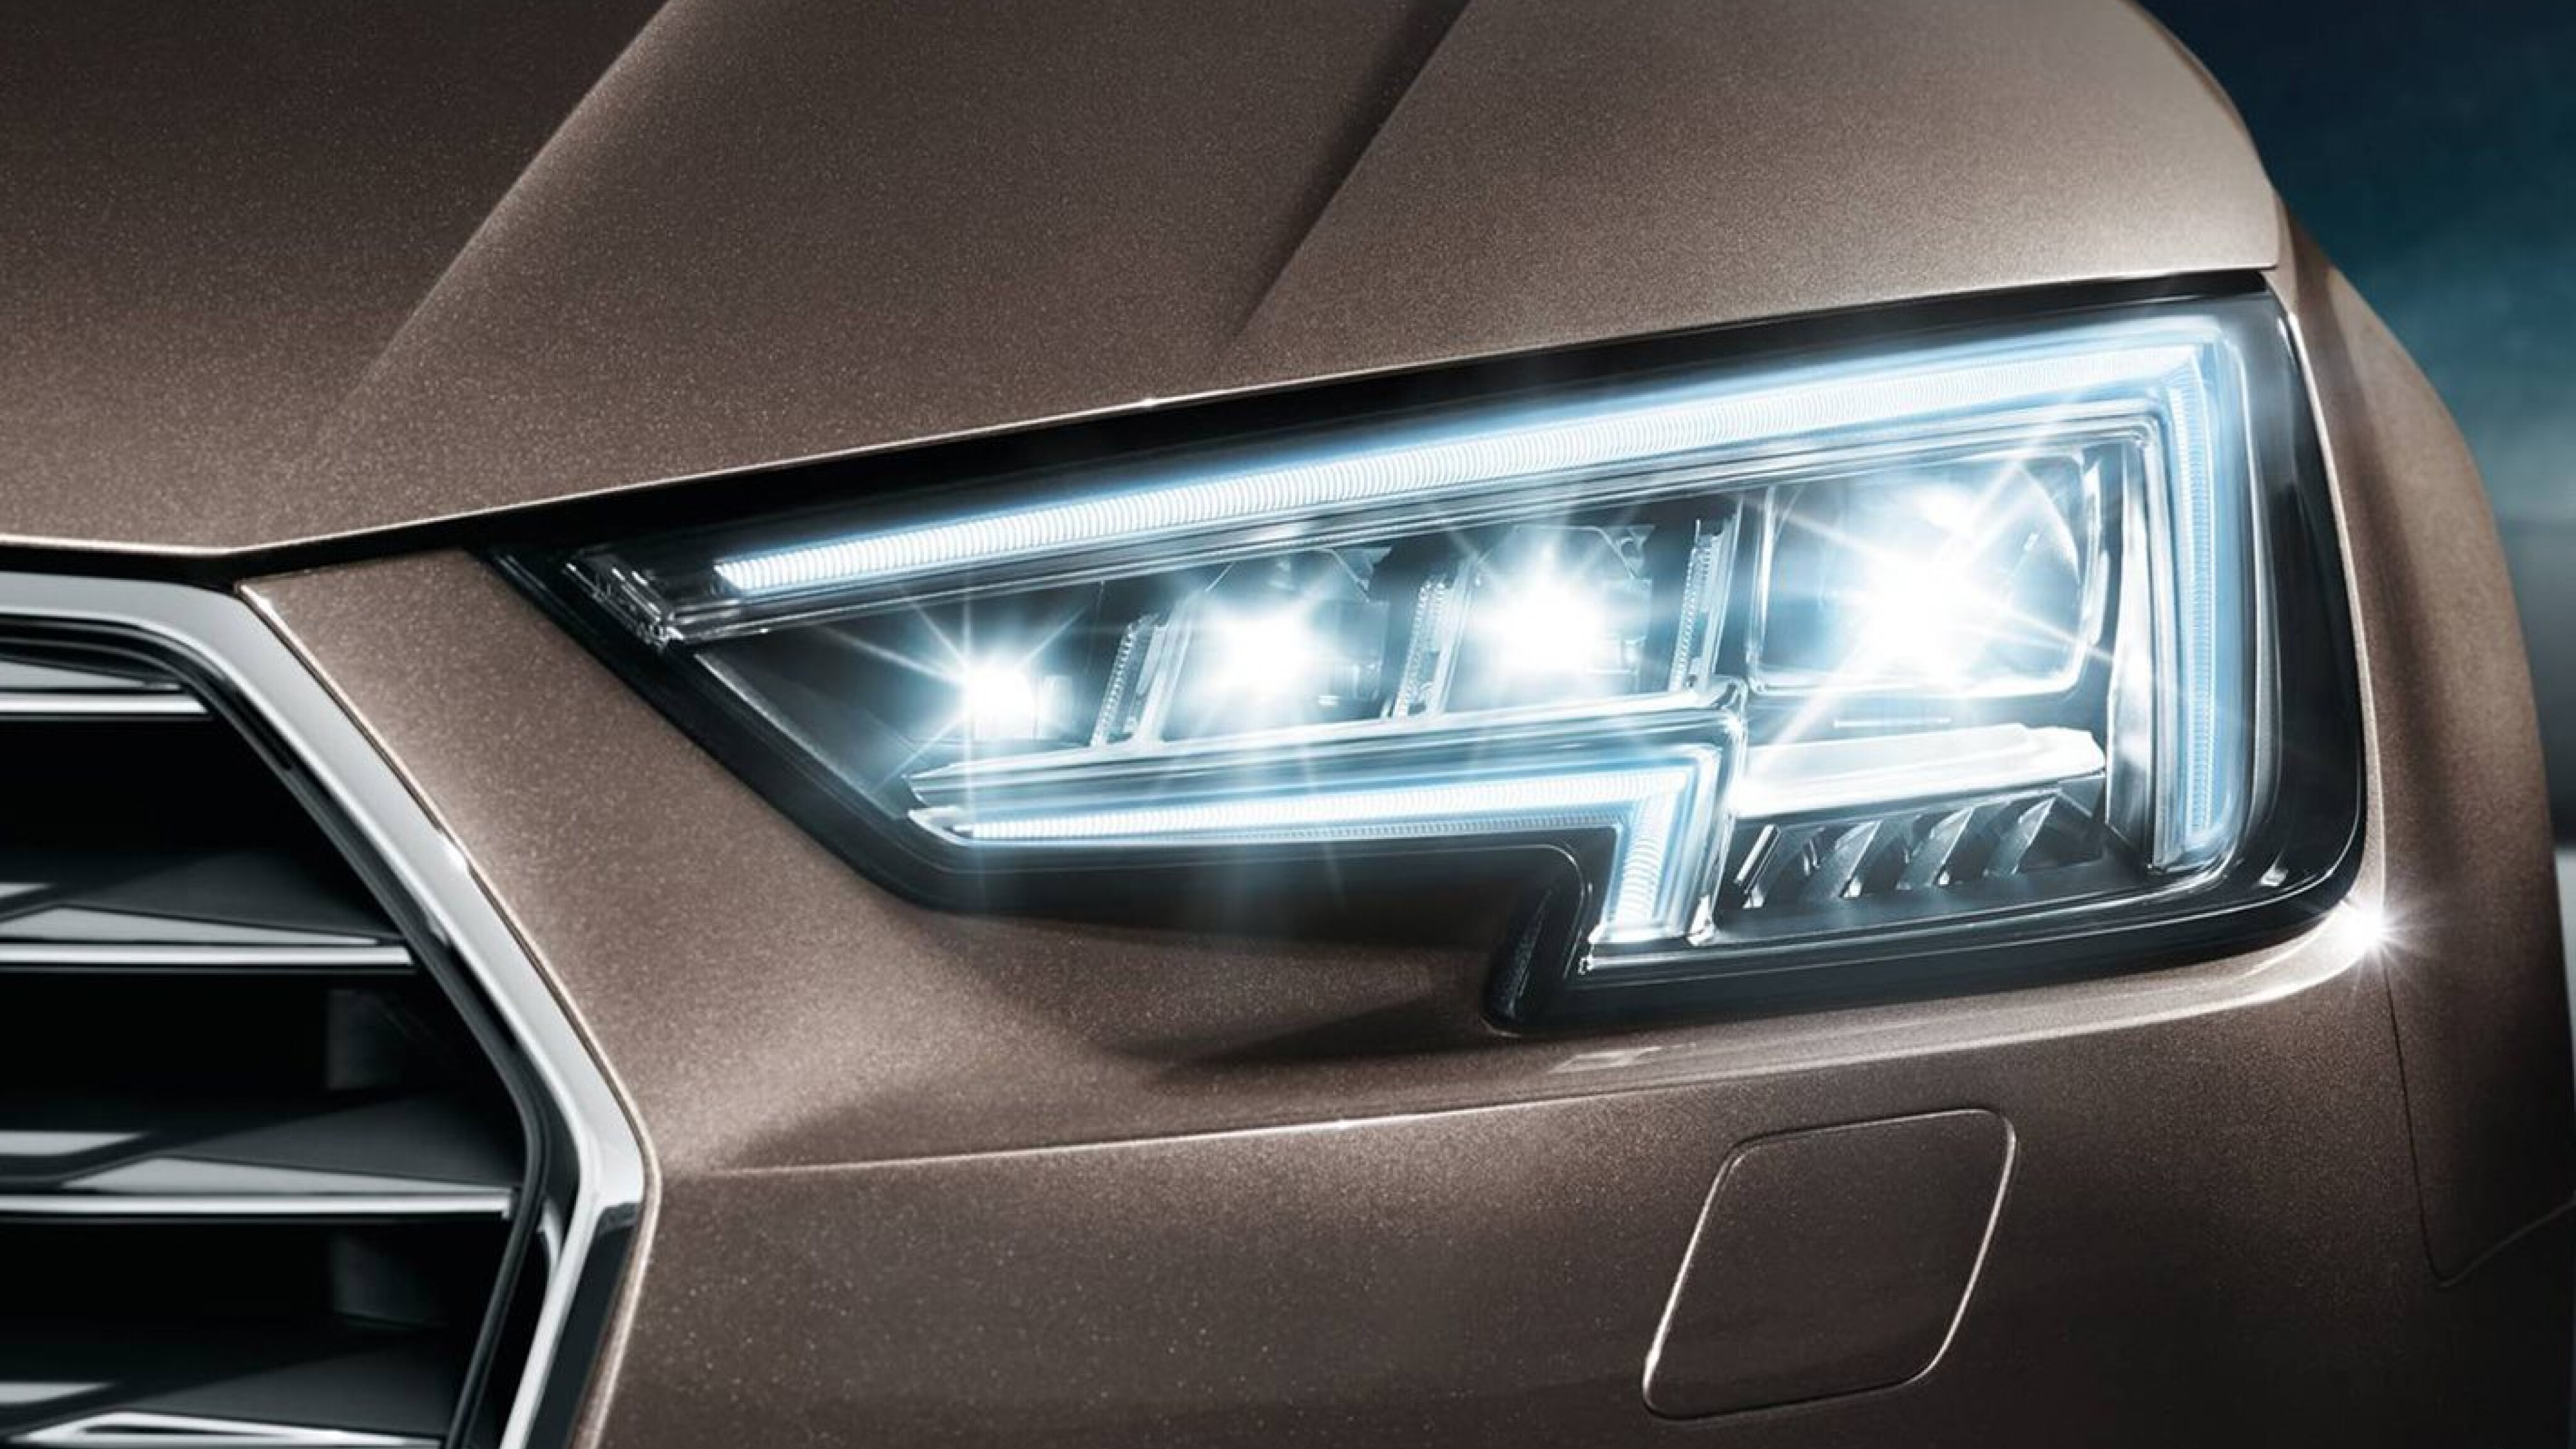 trojansk hest Meyella Musling Audi Matrix LED headlight technology: does it work?